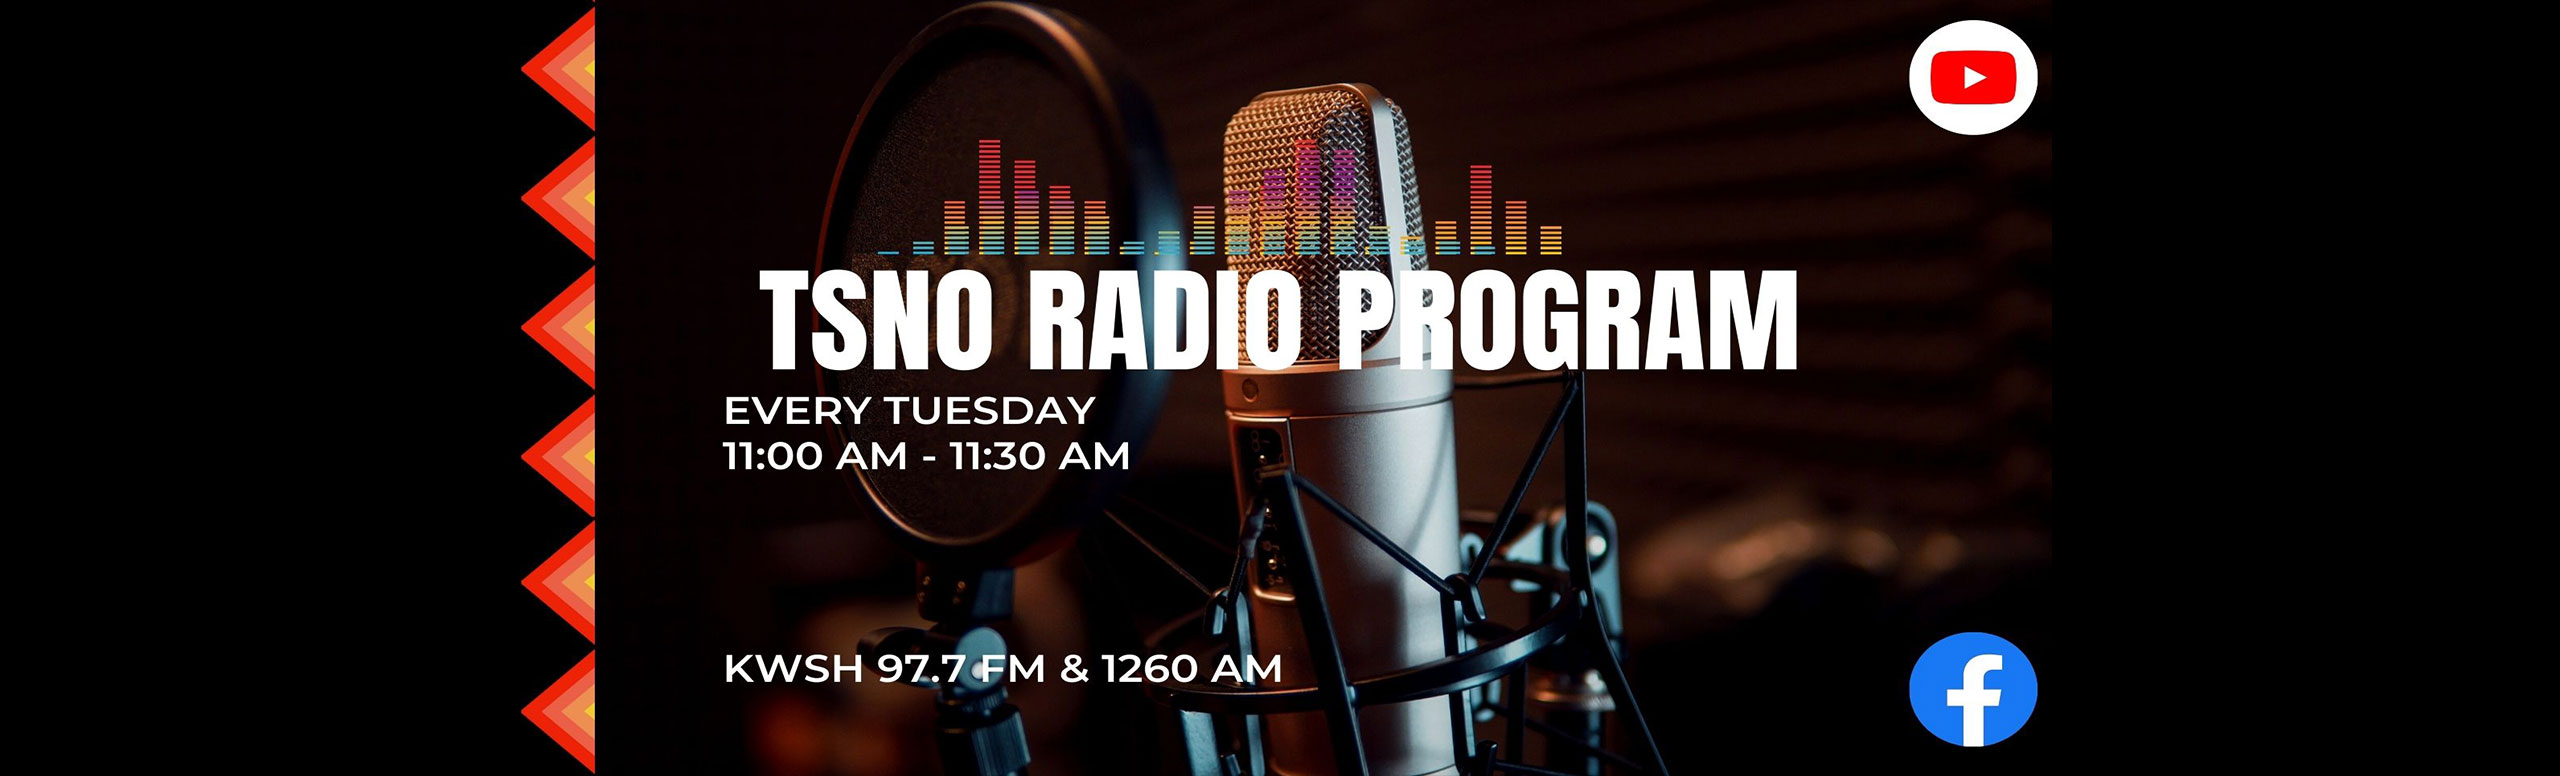 TSNO RADIO PROGRAM 
Every Tuesday 11:00AM - 11:30AM